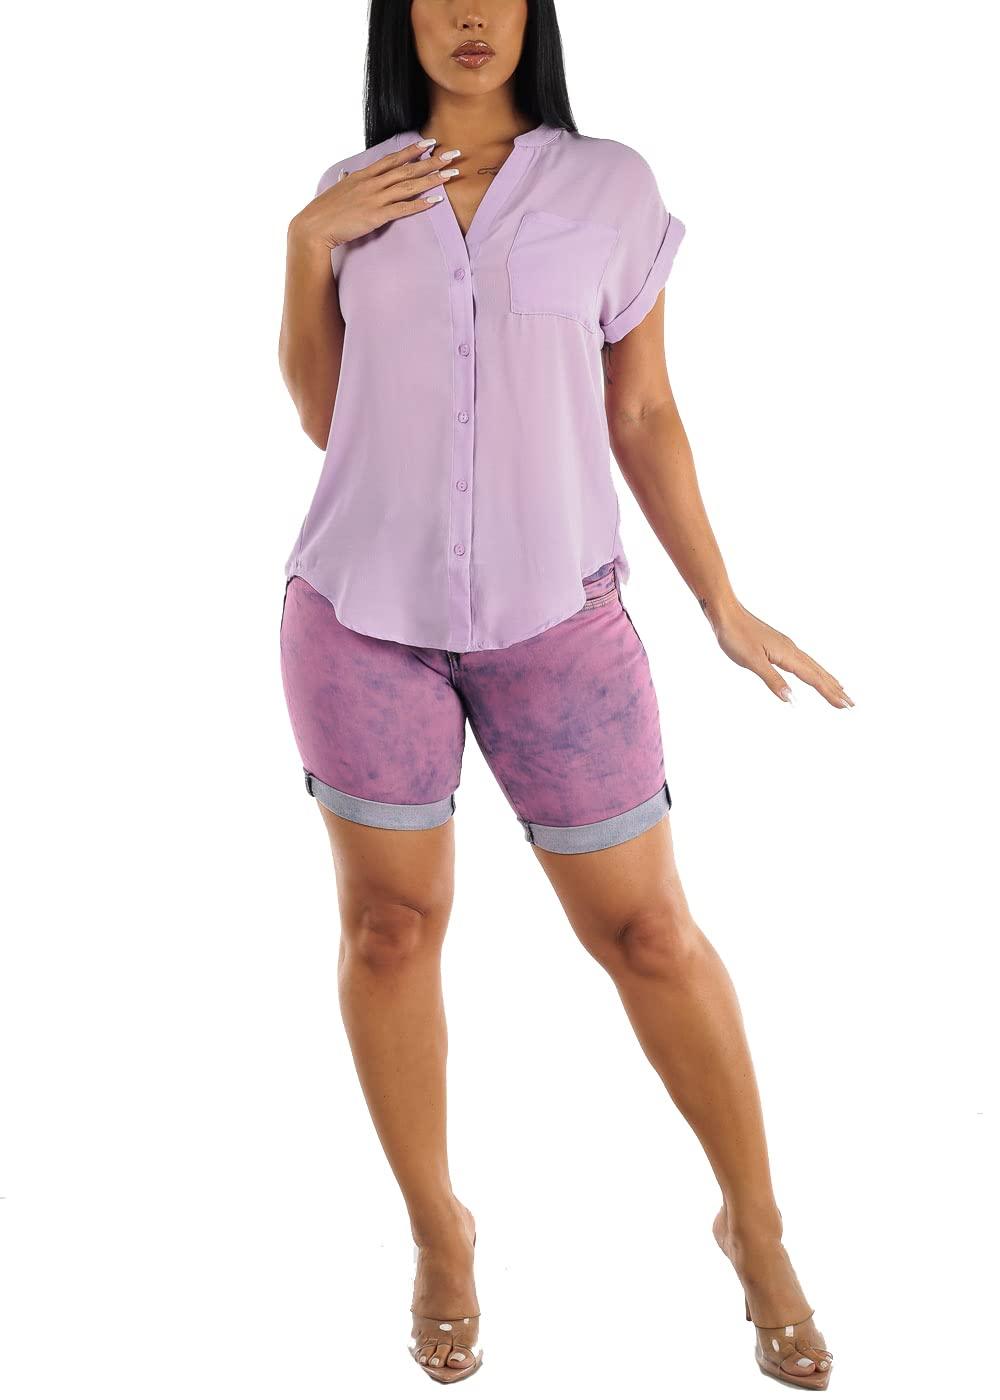 Moda Xpress Womens Juniors Butt Lifting Acid Purple Mid Thigh Shorts Size 5 10142D - Bona Fide Fashion